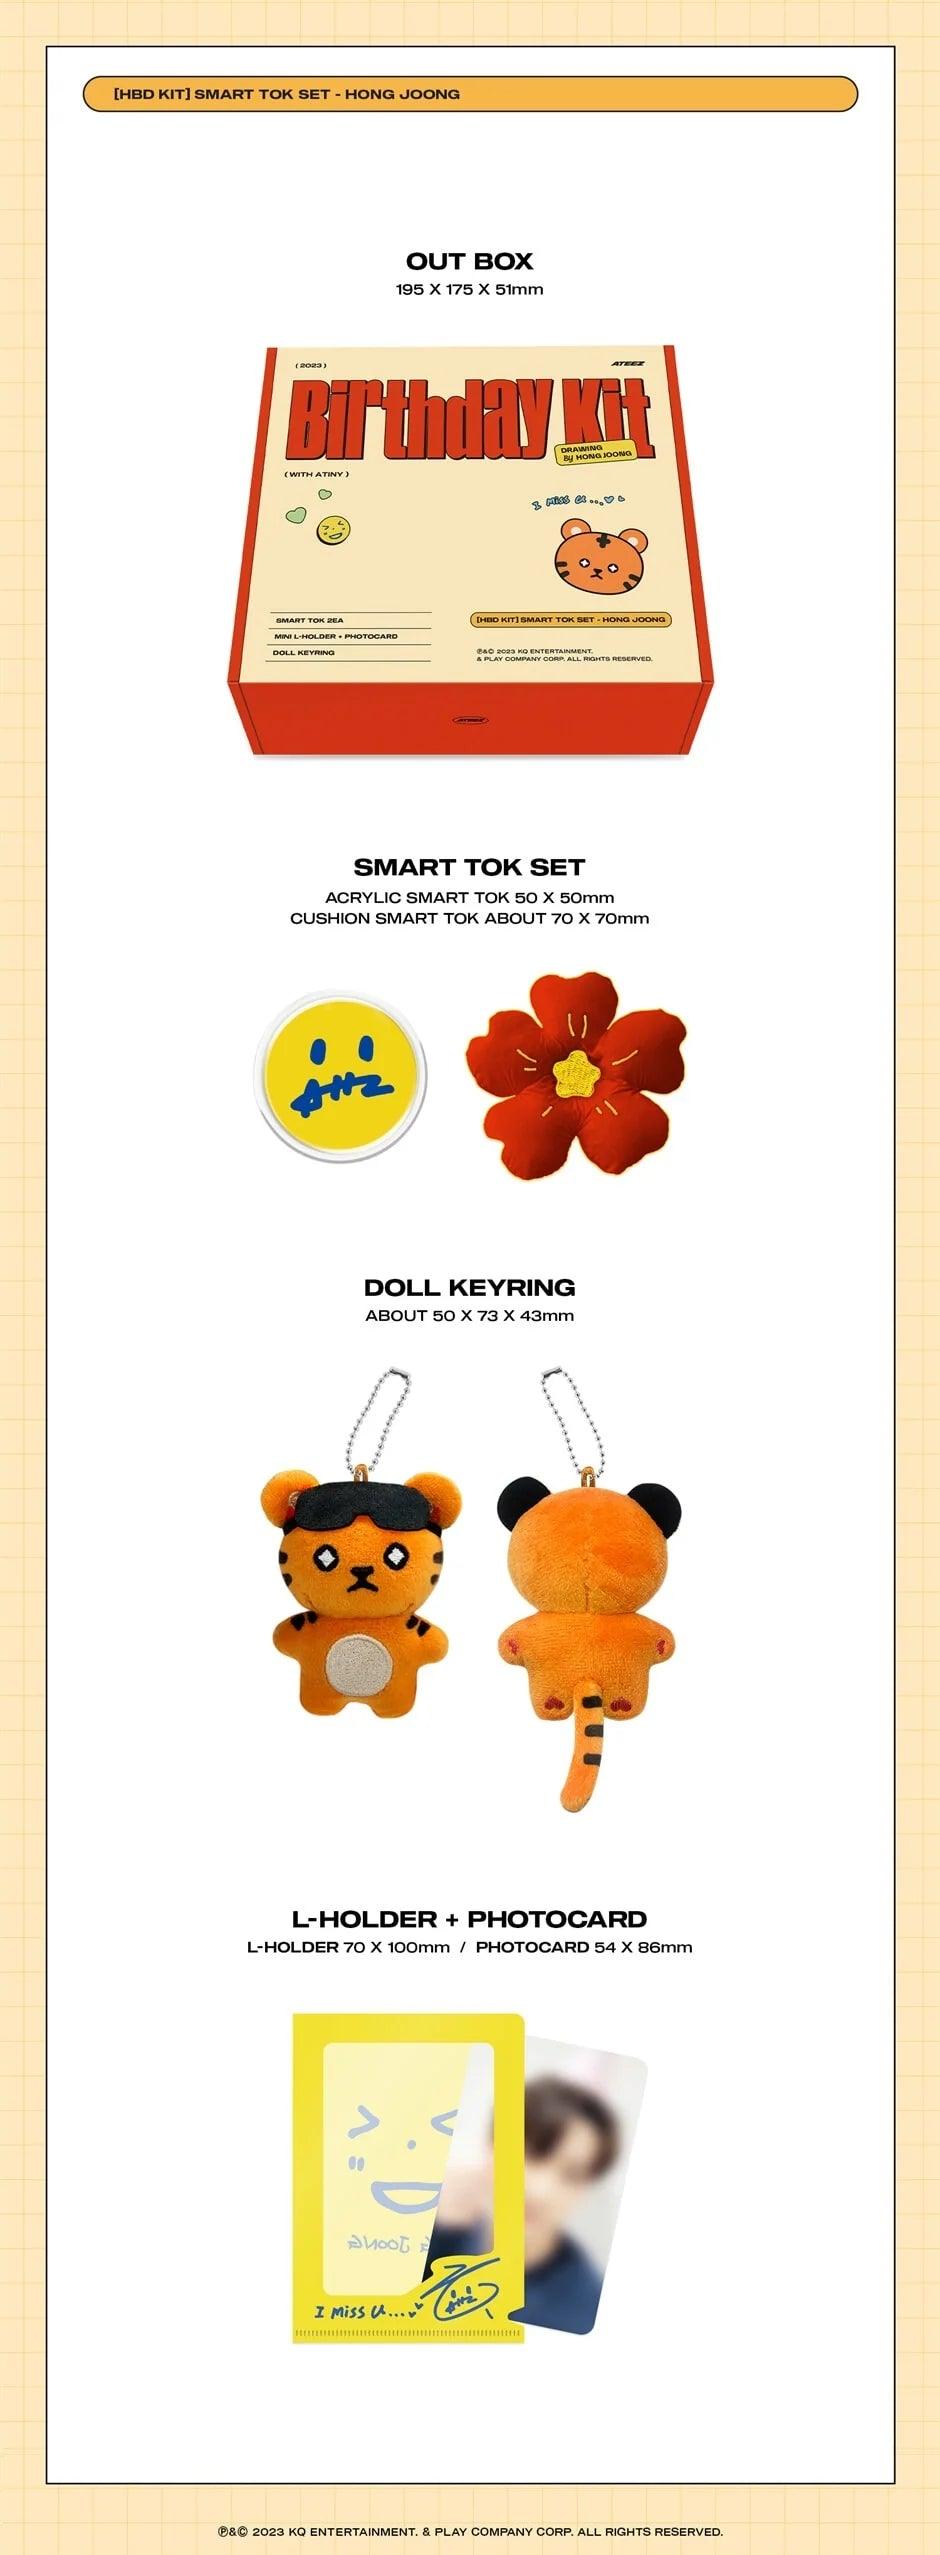 HONGJOONG (ATEEZ) - HBD Kit Smart Tok Set (Official MD) - KAEPJJANG SHOP (캡짱 숍)